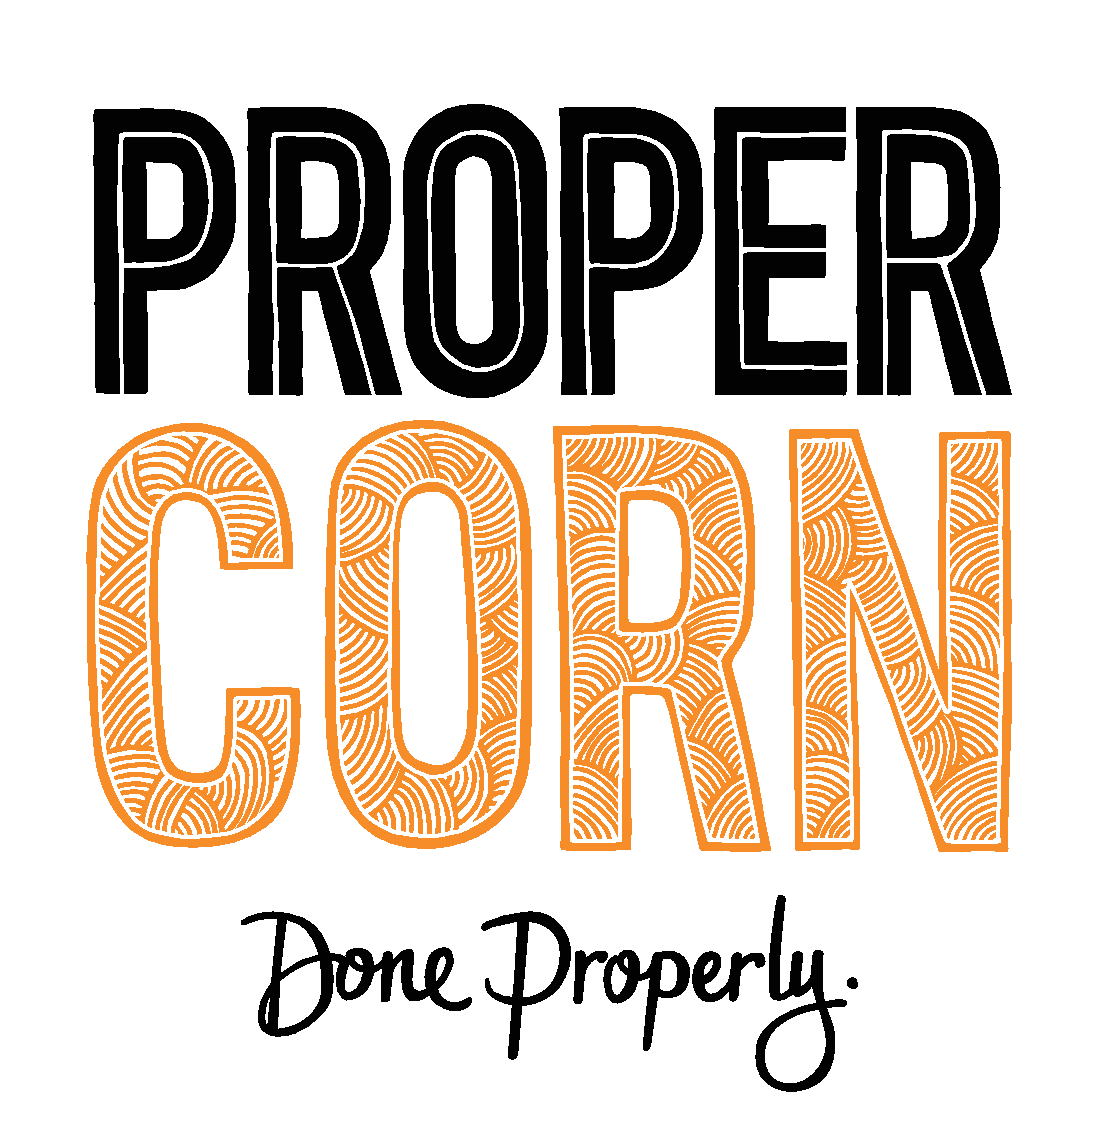 Proper Corn